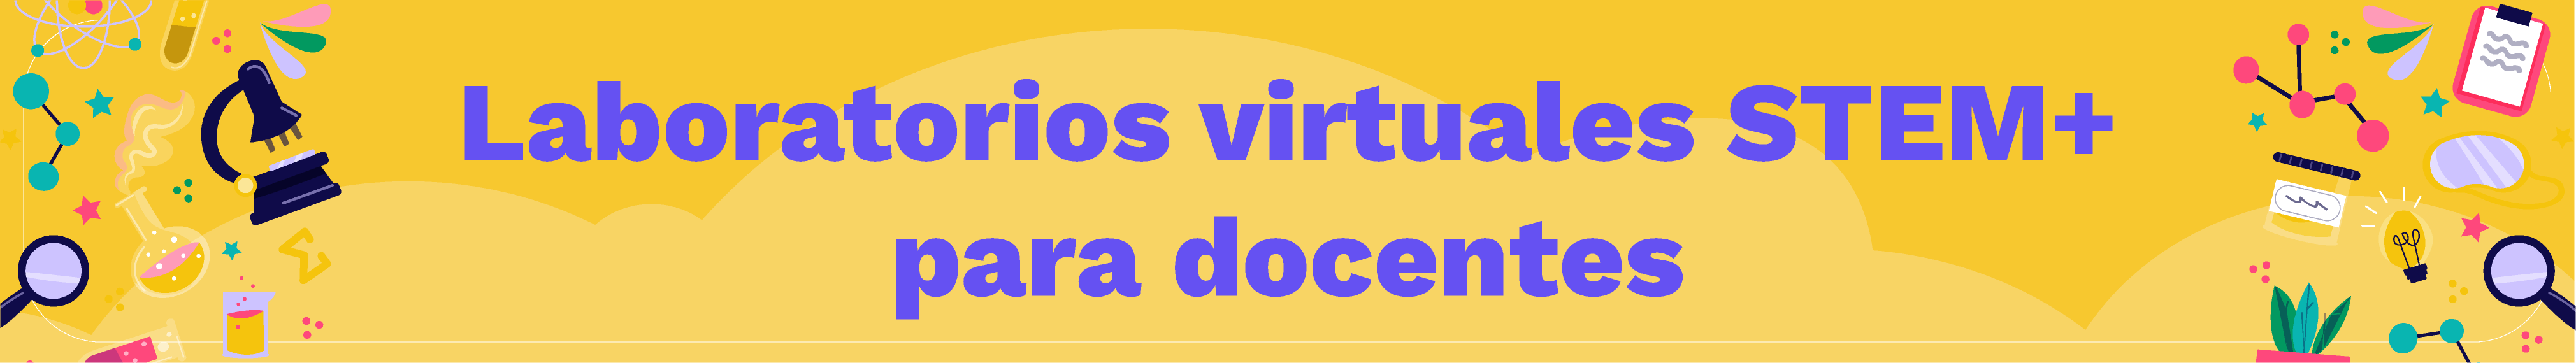 Banner laboratorios virtuales STEM+ para docentes